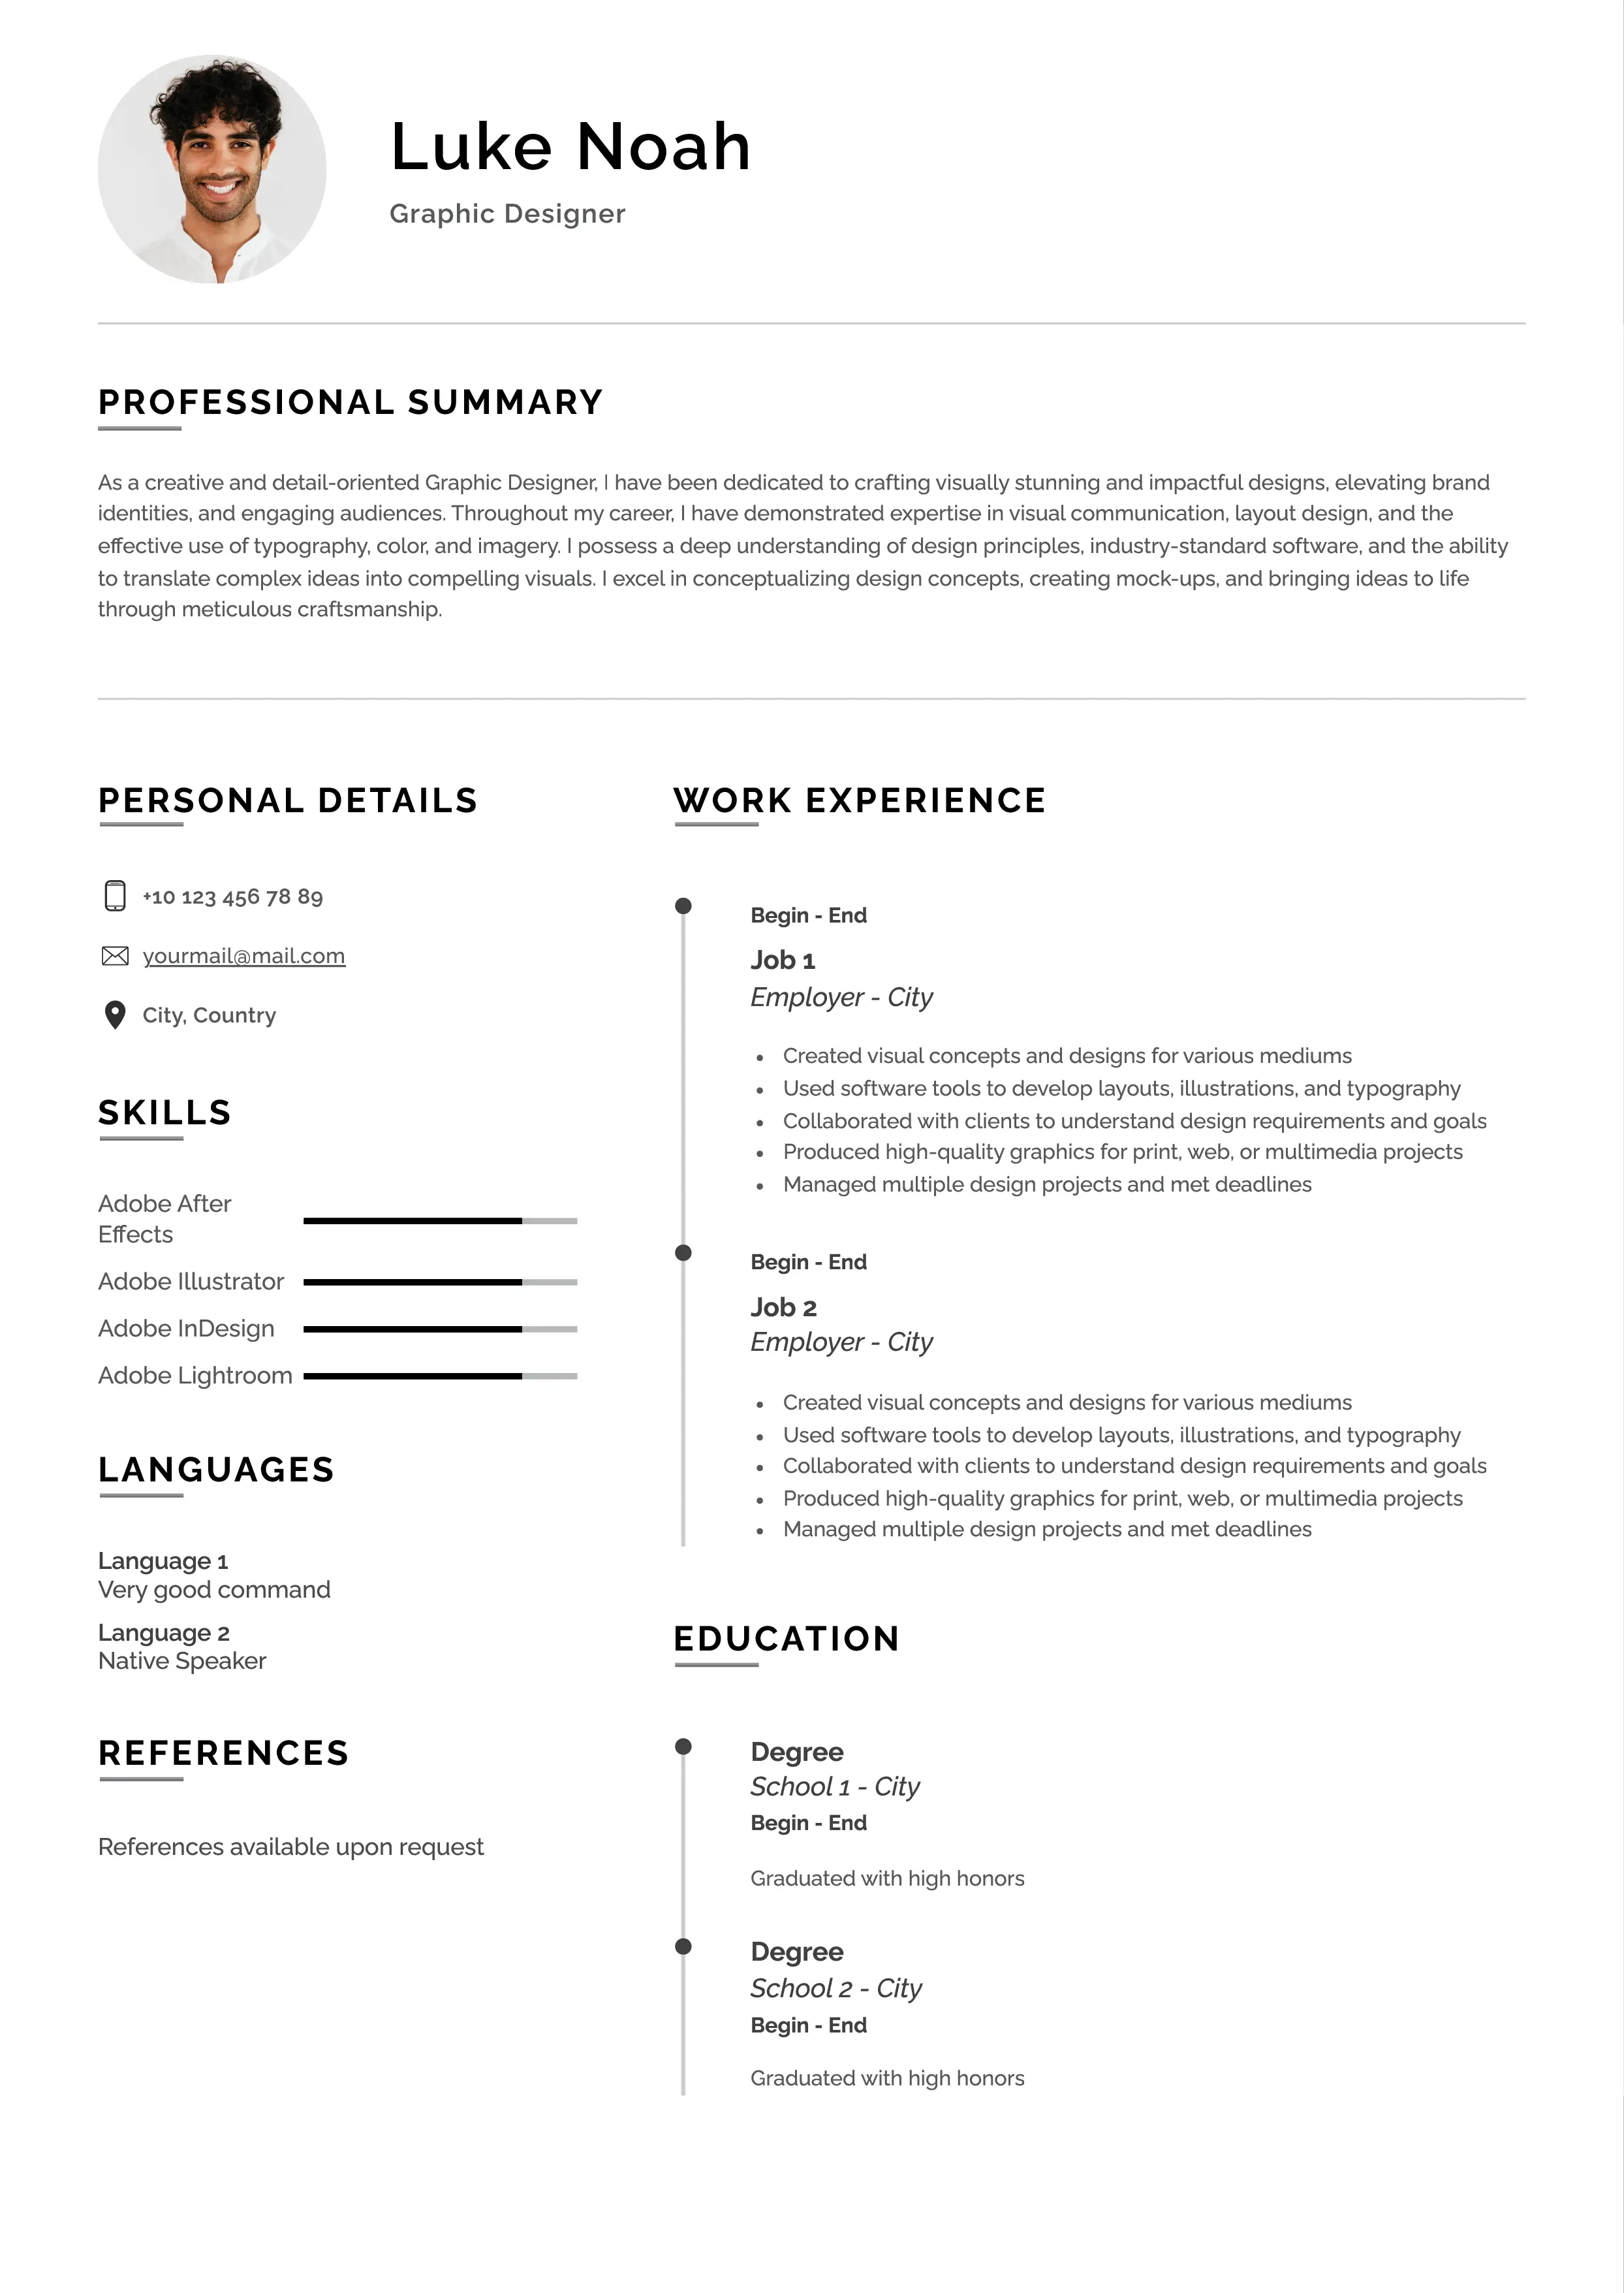 Graphic designer resume CV